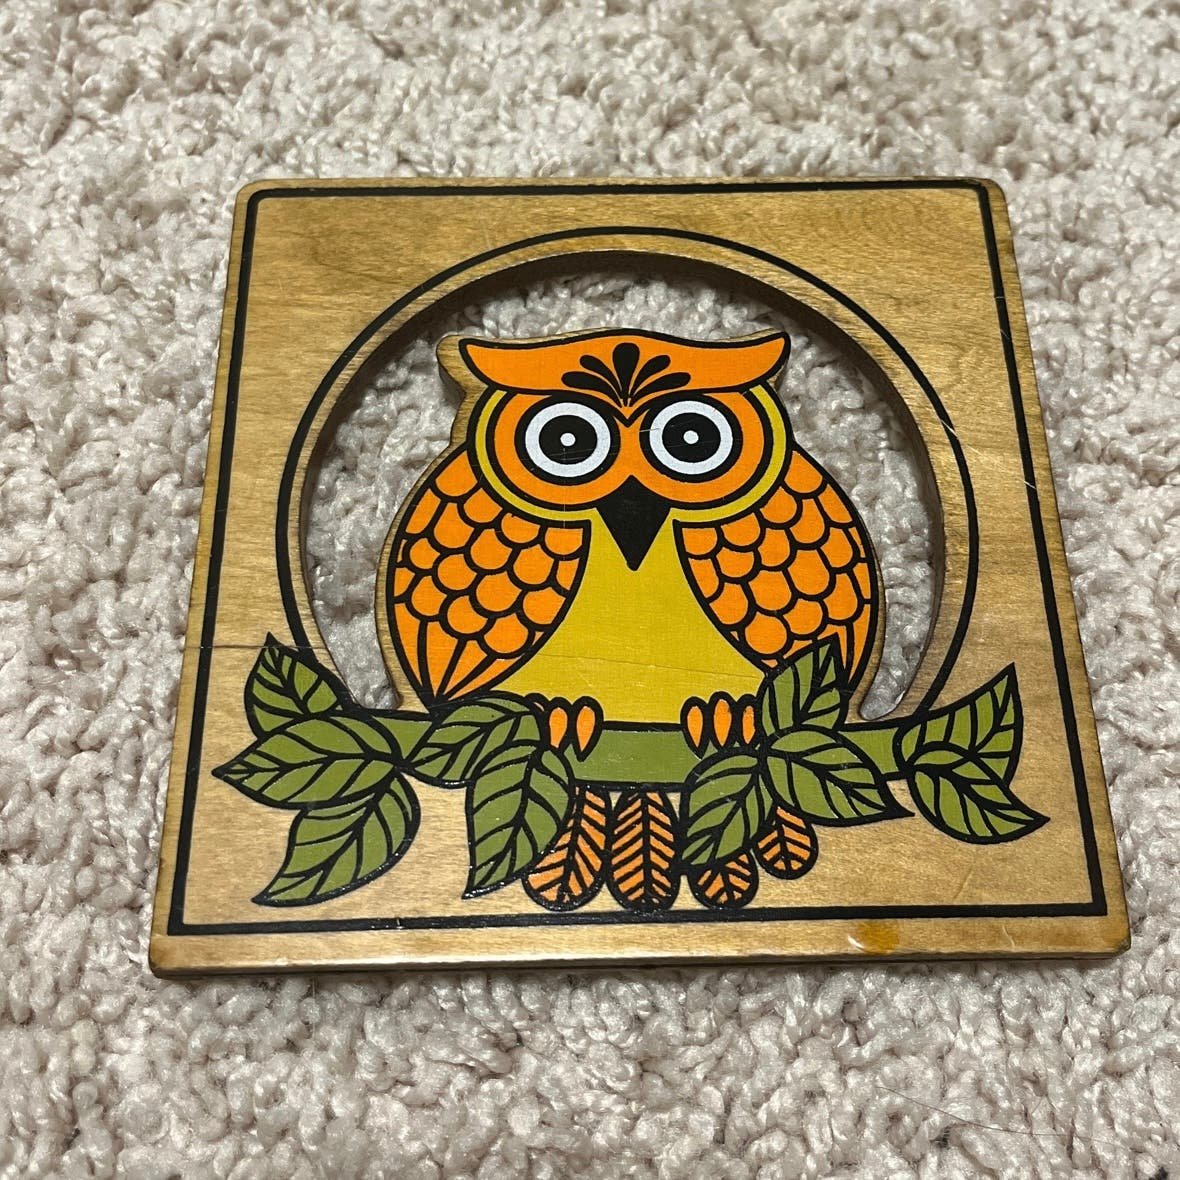 Vintage Owl plaque otagiri omc Japan L4ydlz0LZ